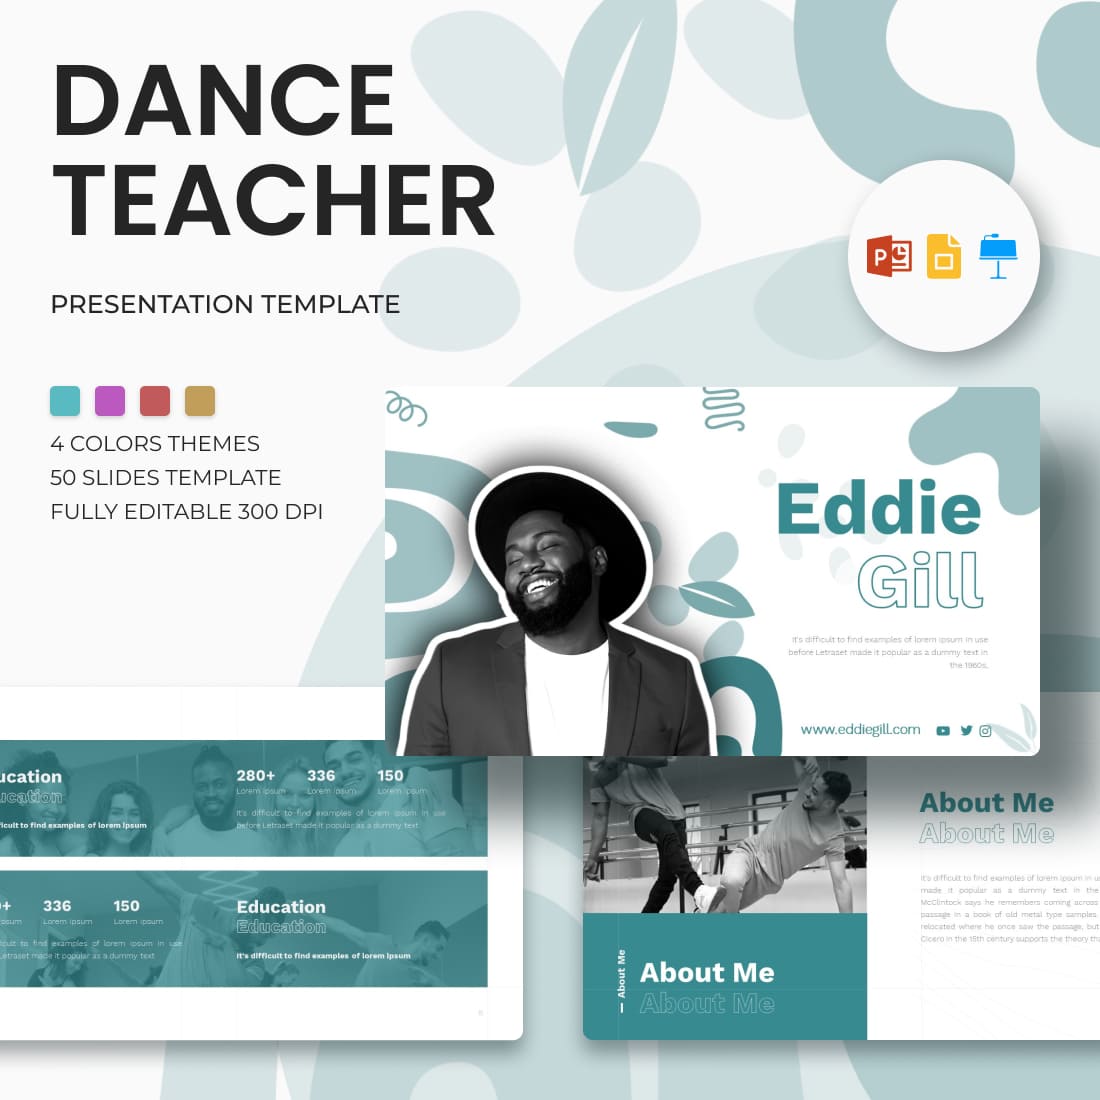 Dance Teacher Presentation Template.